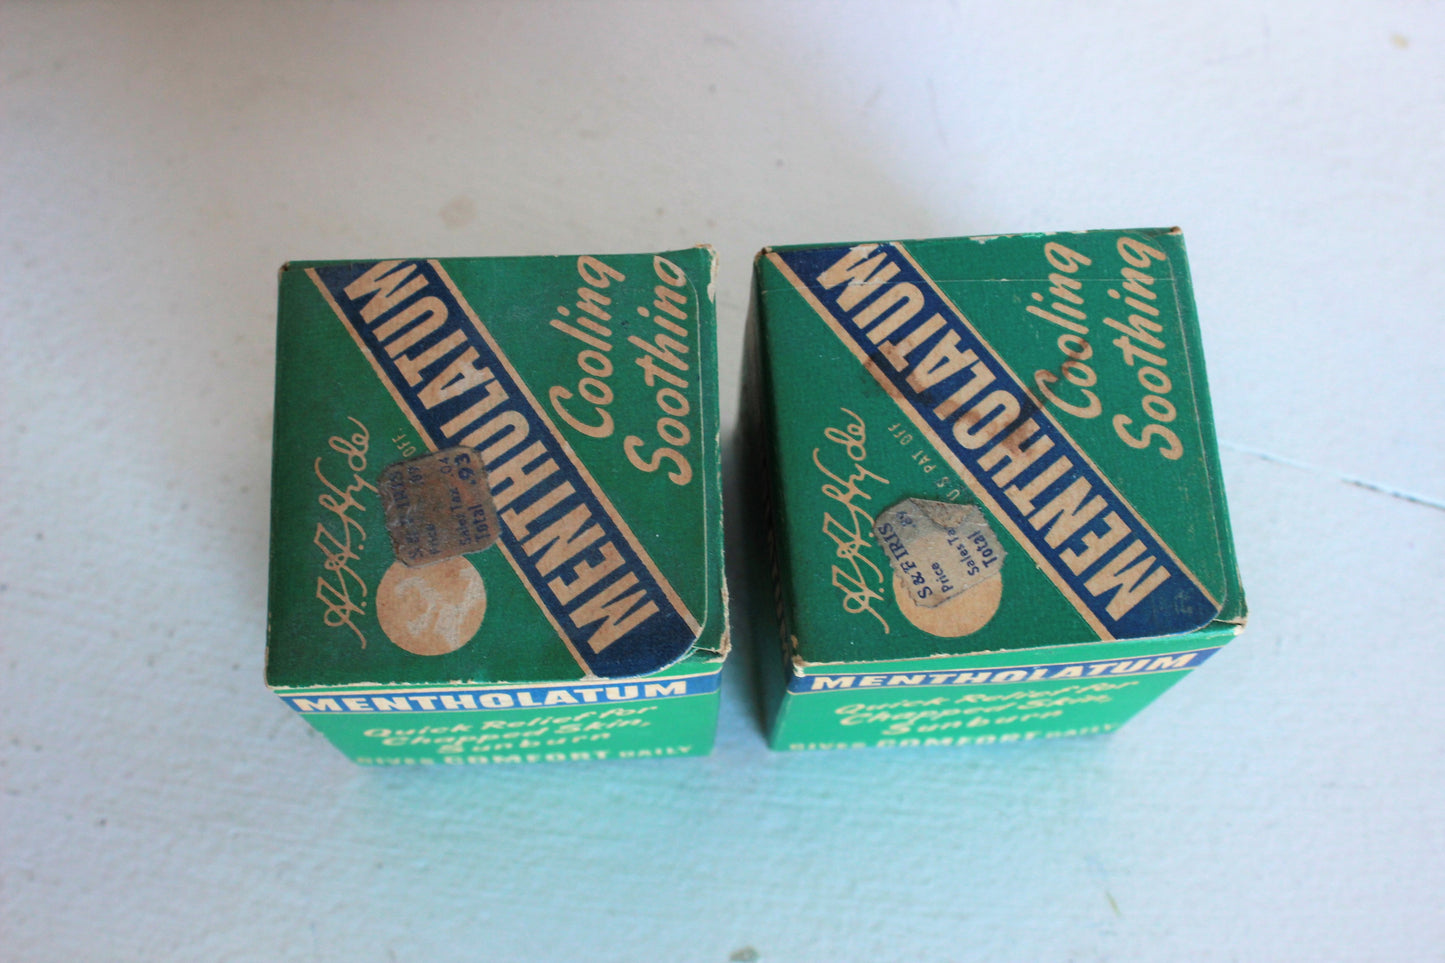 Vintage 1940s or 1950s Mentholatum Jar in Original Box NEW Unopened